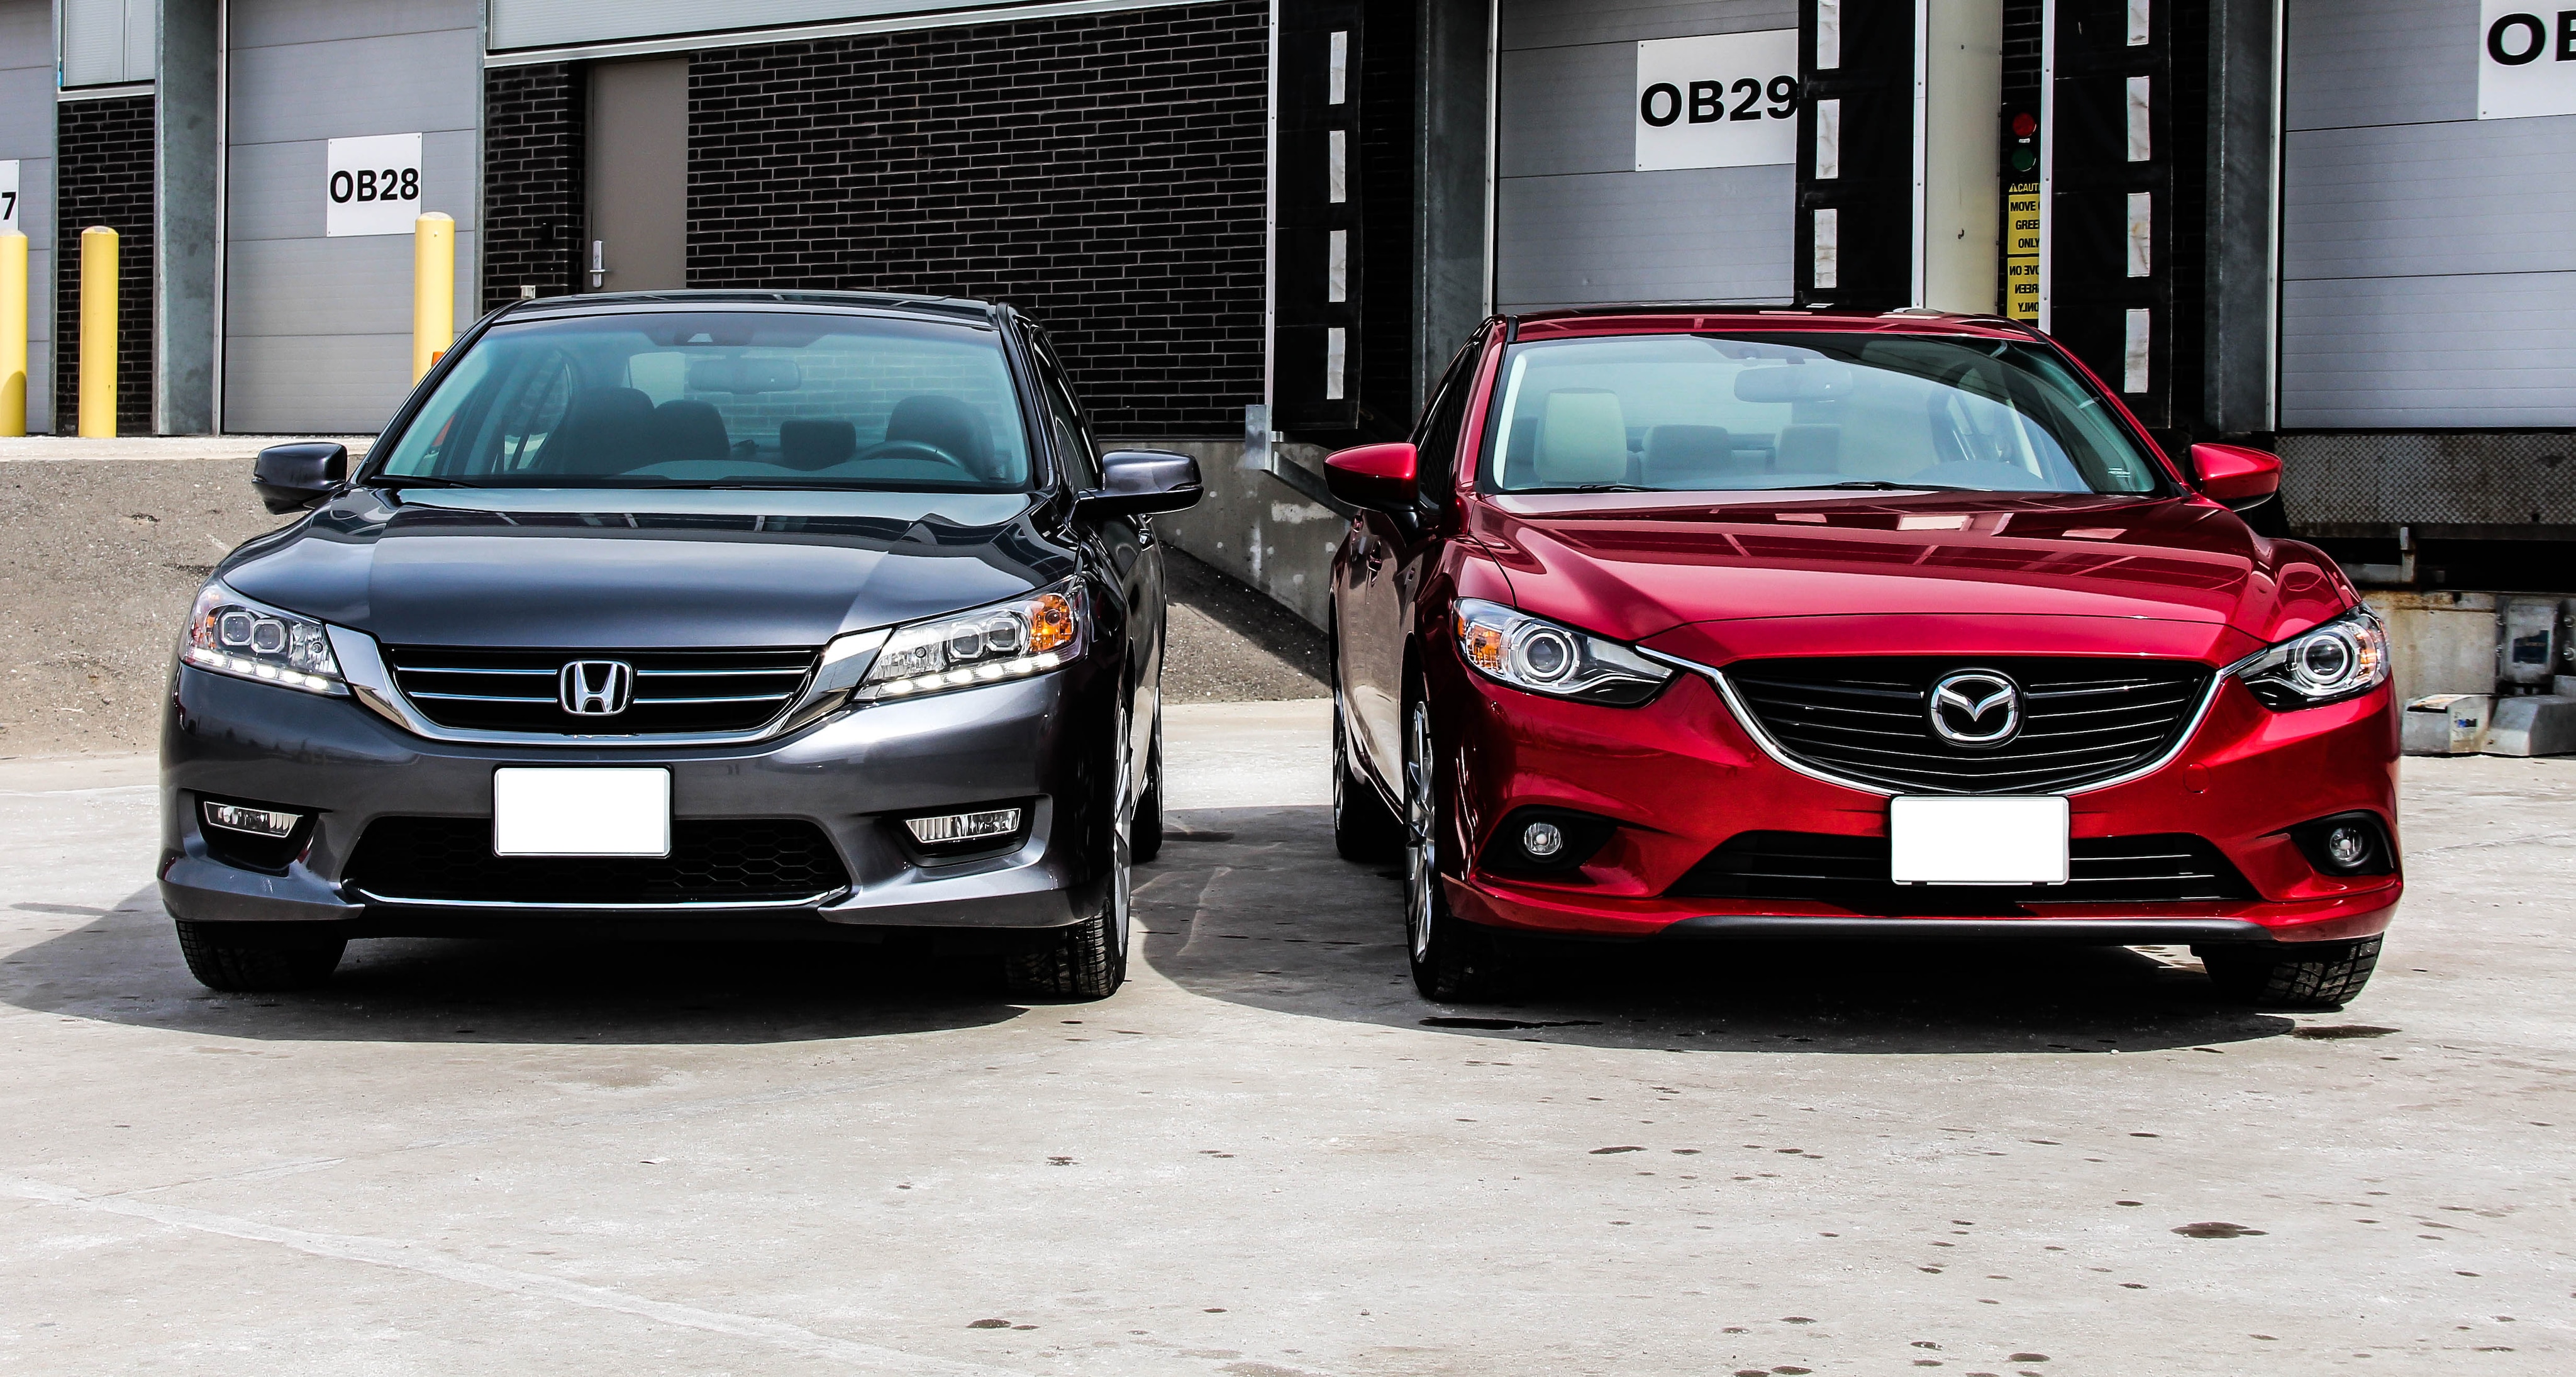 The 2014 Honda Accord Versus the 2014 Mazda 6